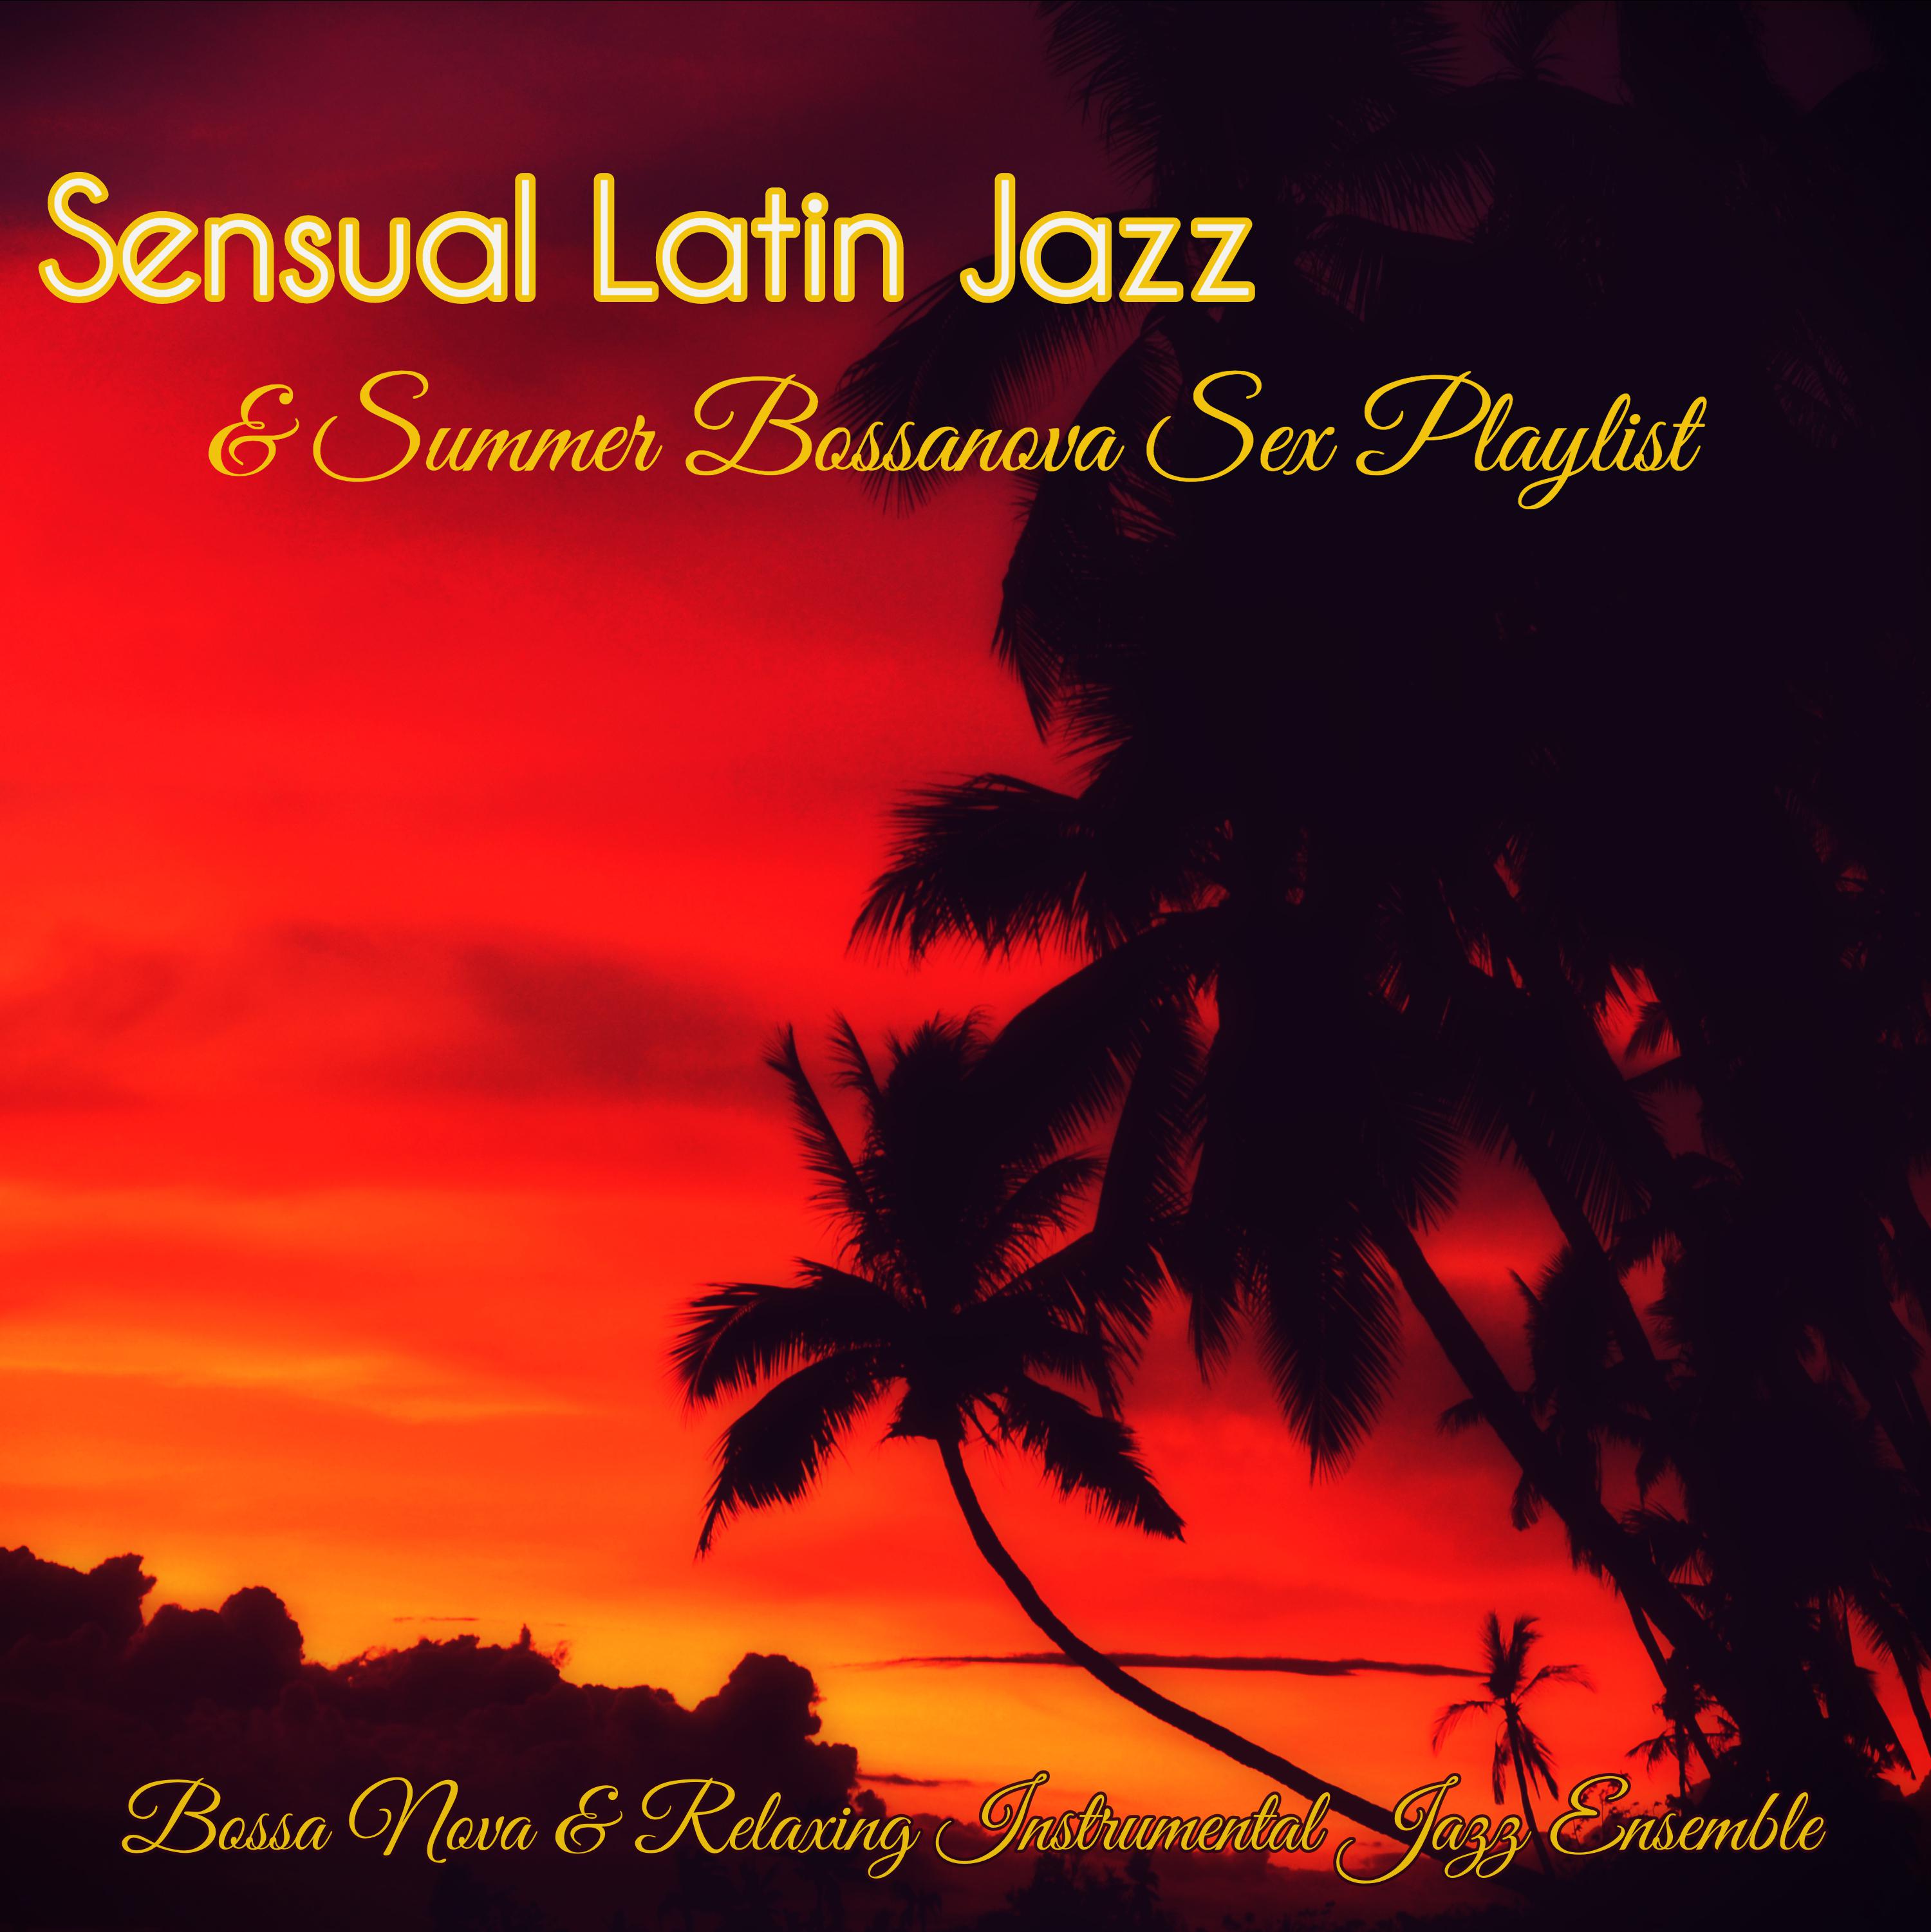 Latin Sound - Latin Jazz Rhythm